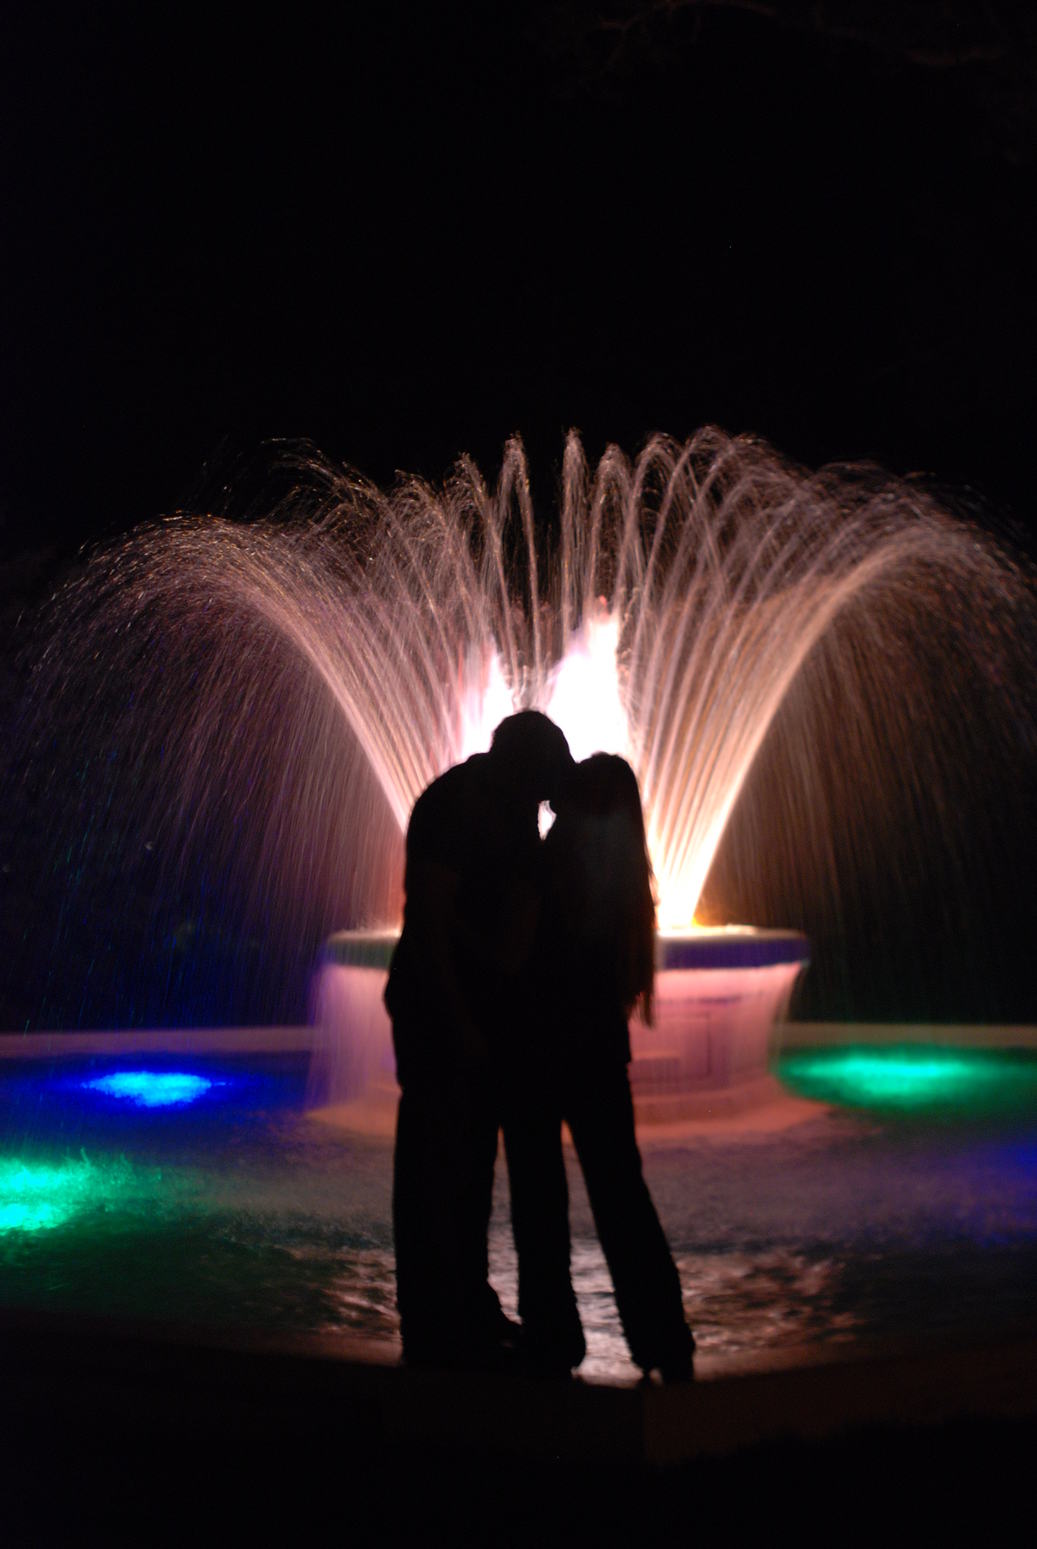 Alliance, NE: Romance at th Fountain